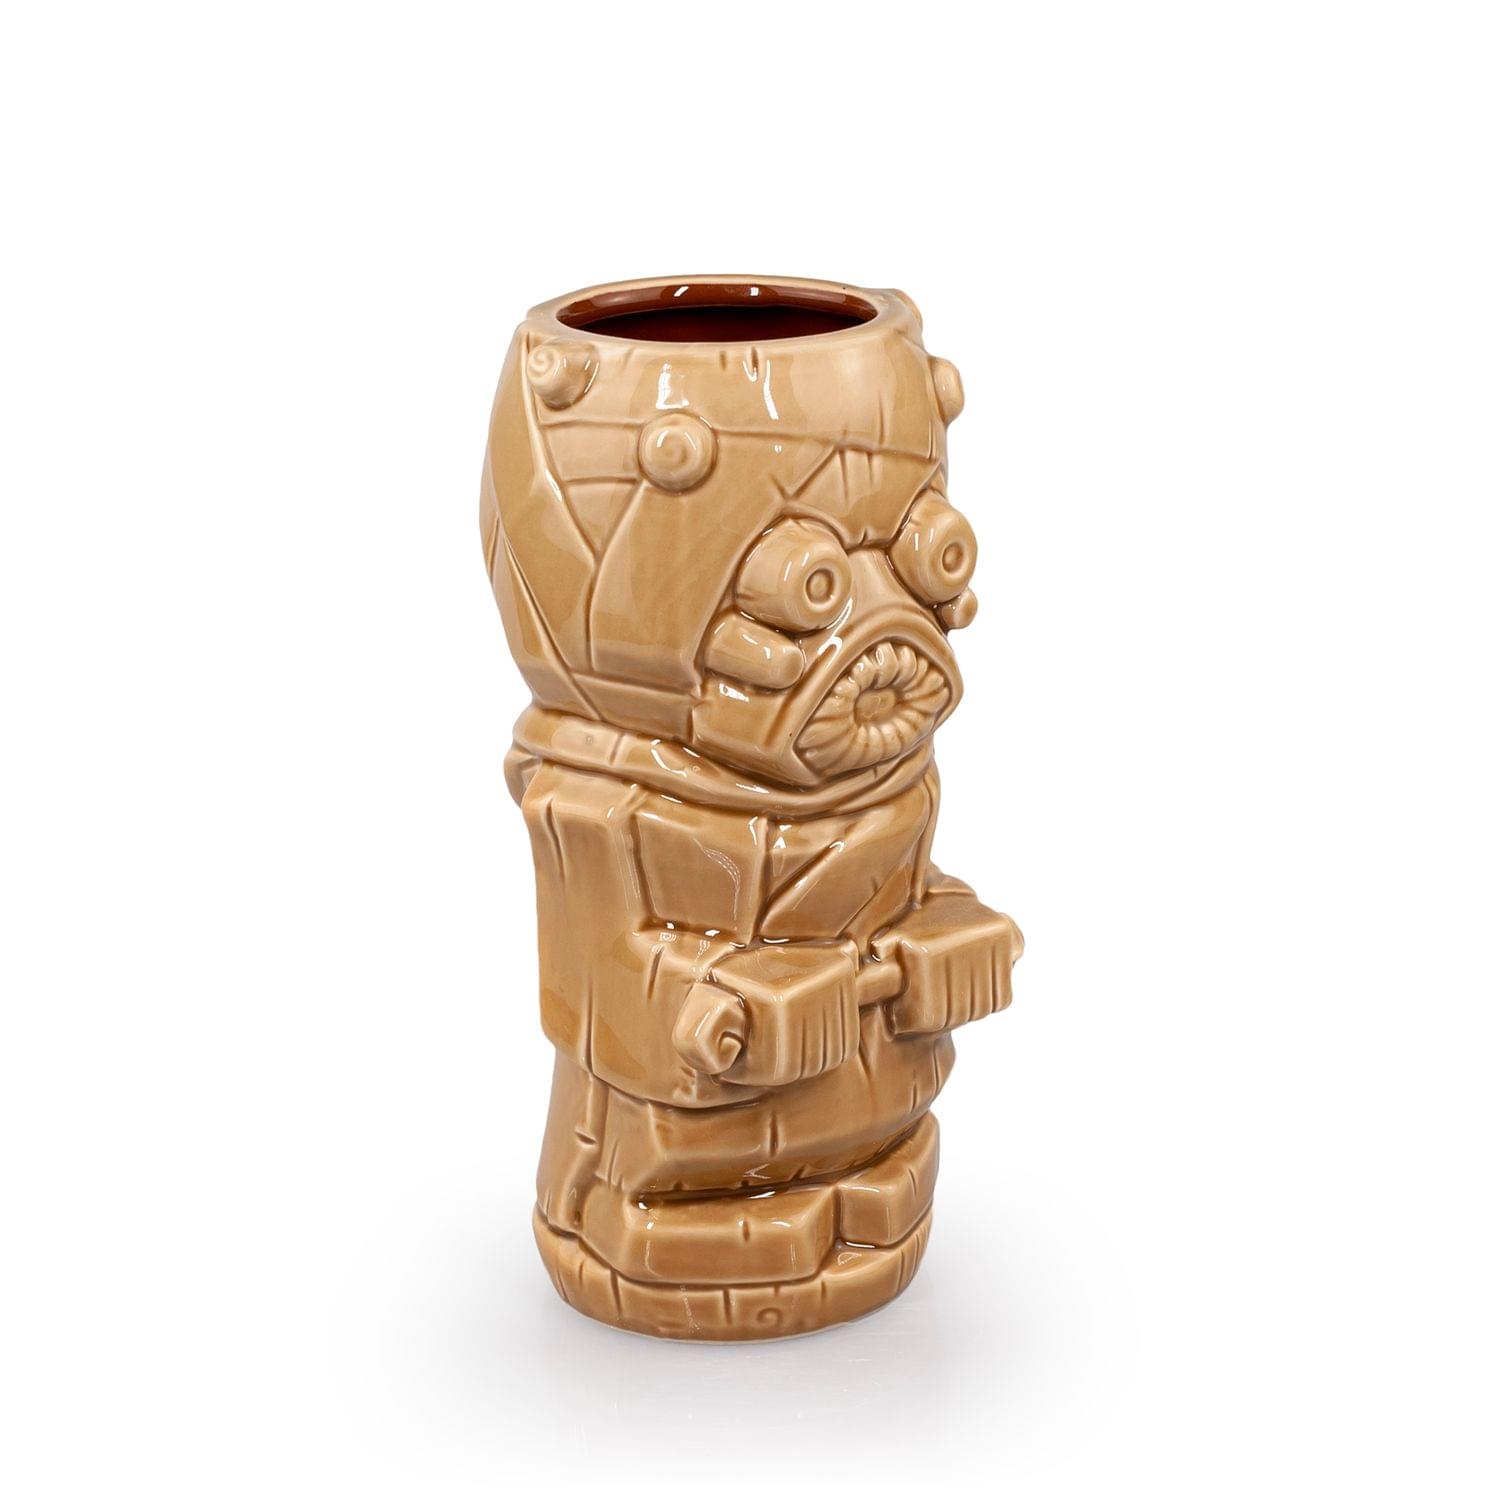 Geeki Tikis Star Wars Tusken Raider Mug | Crafted Ceramic | Holds 14 Ounces